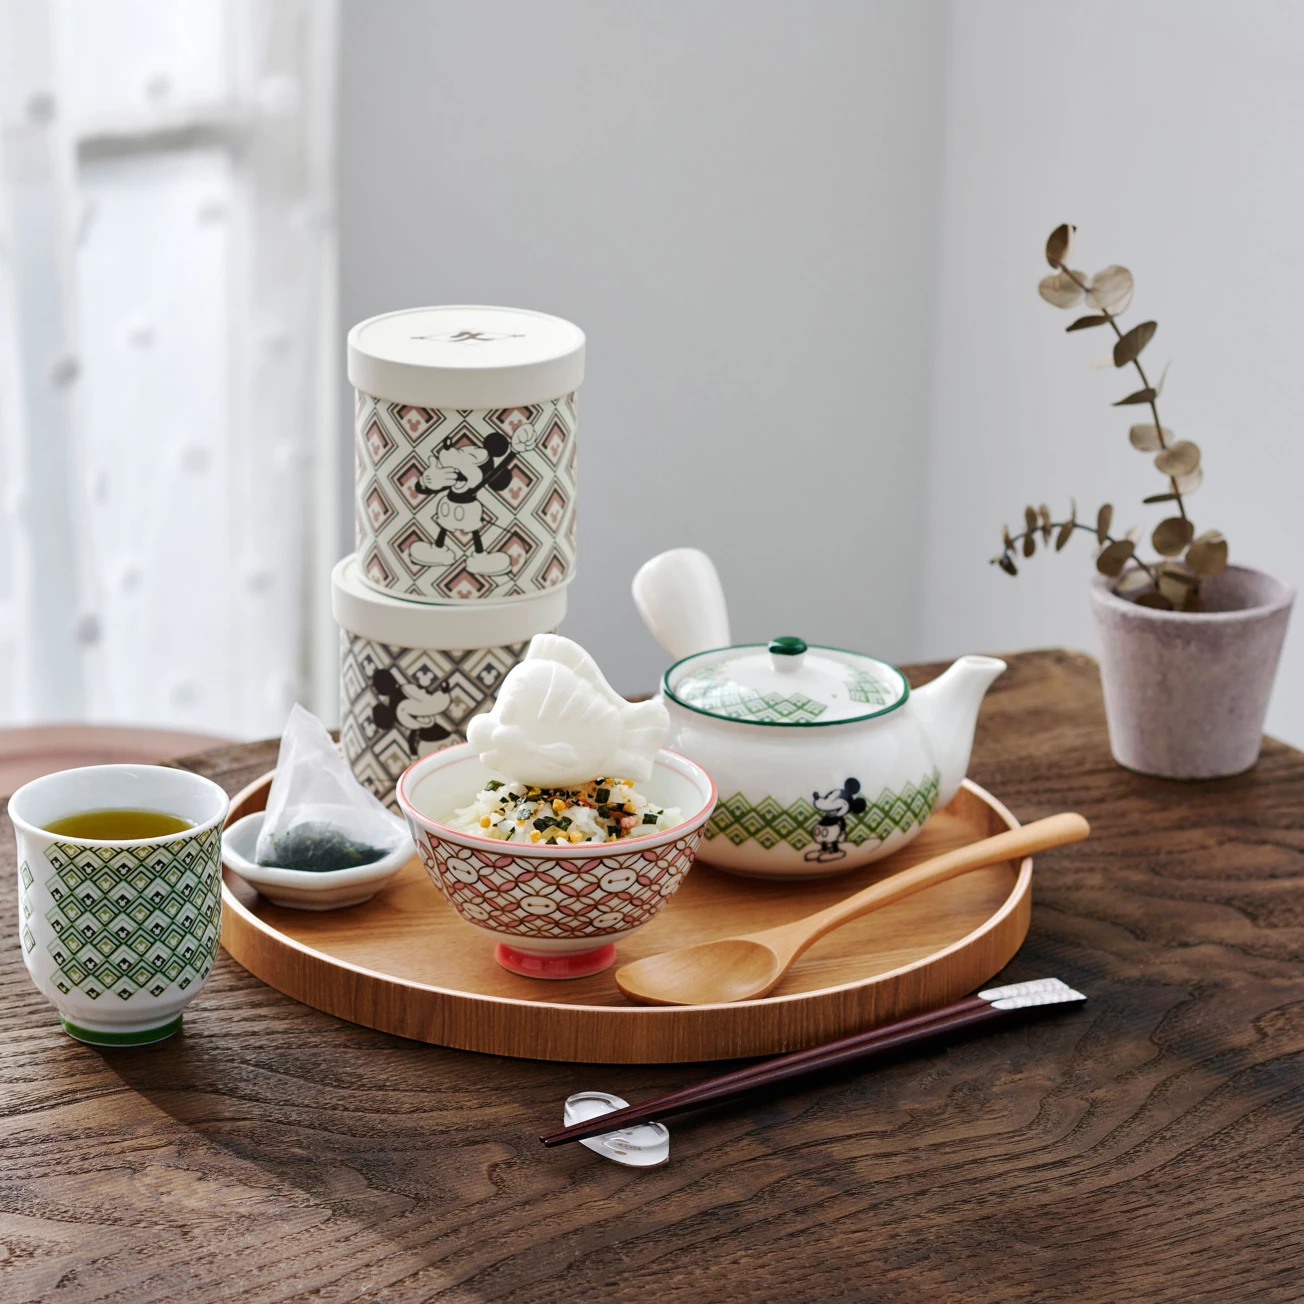 SDJ - Japanese Tea Collection